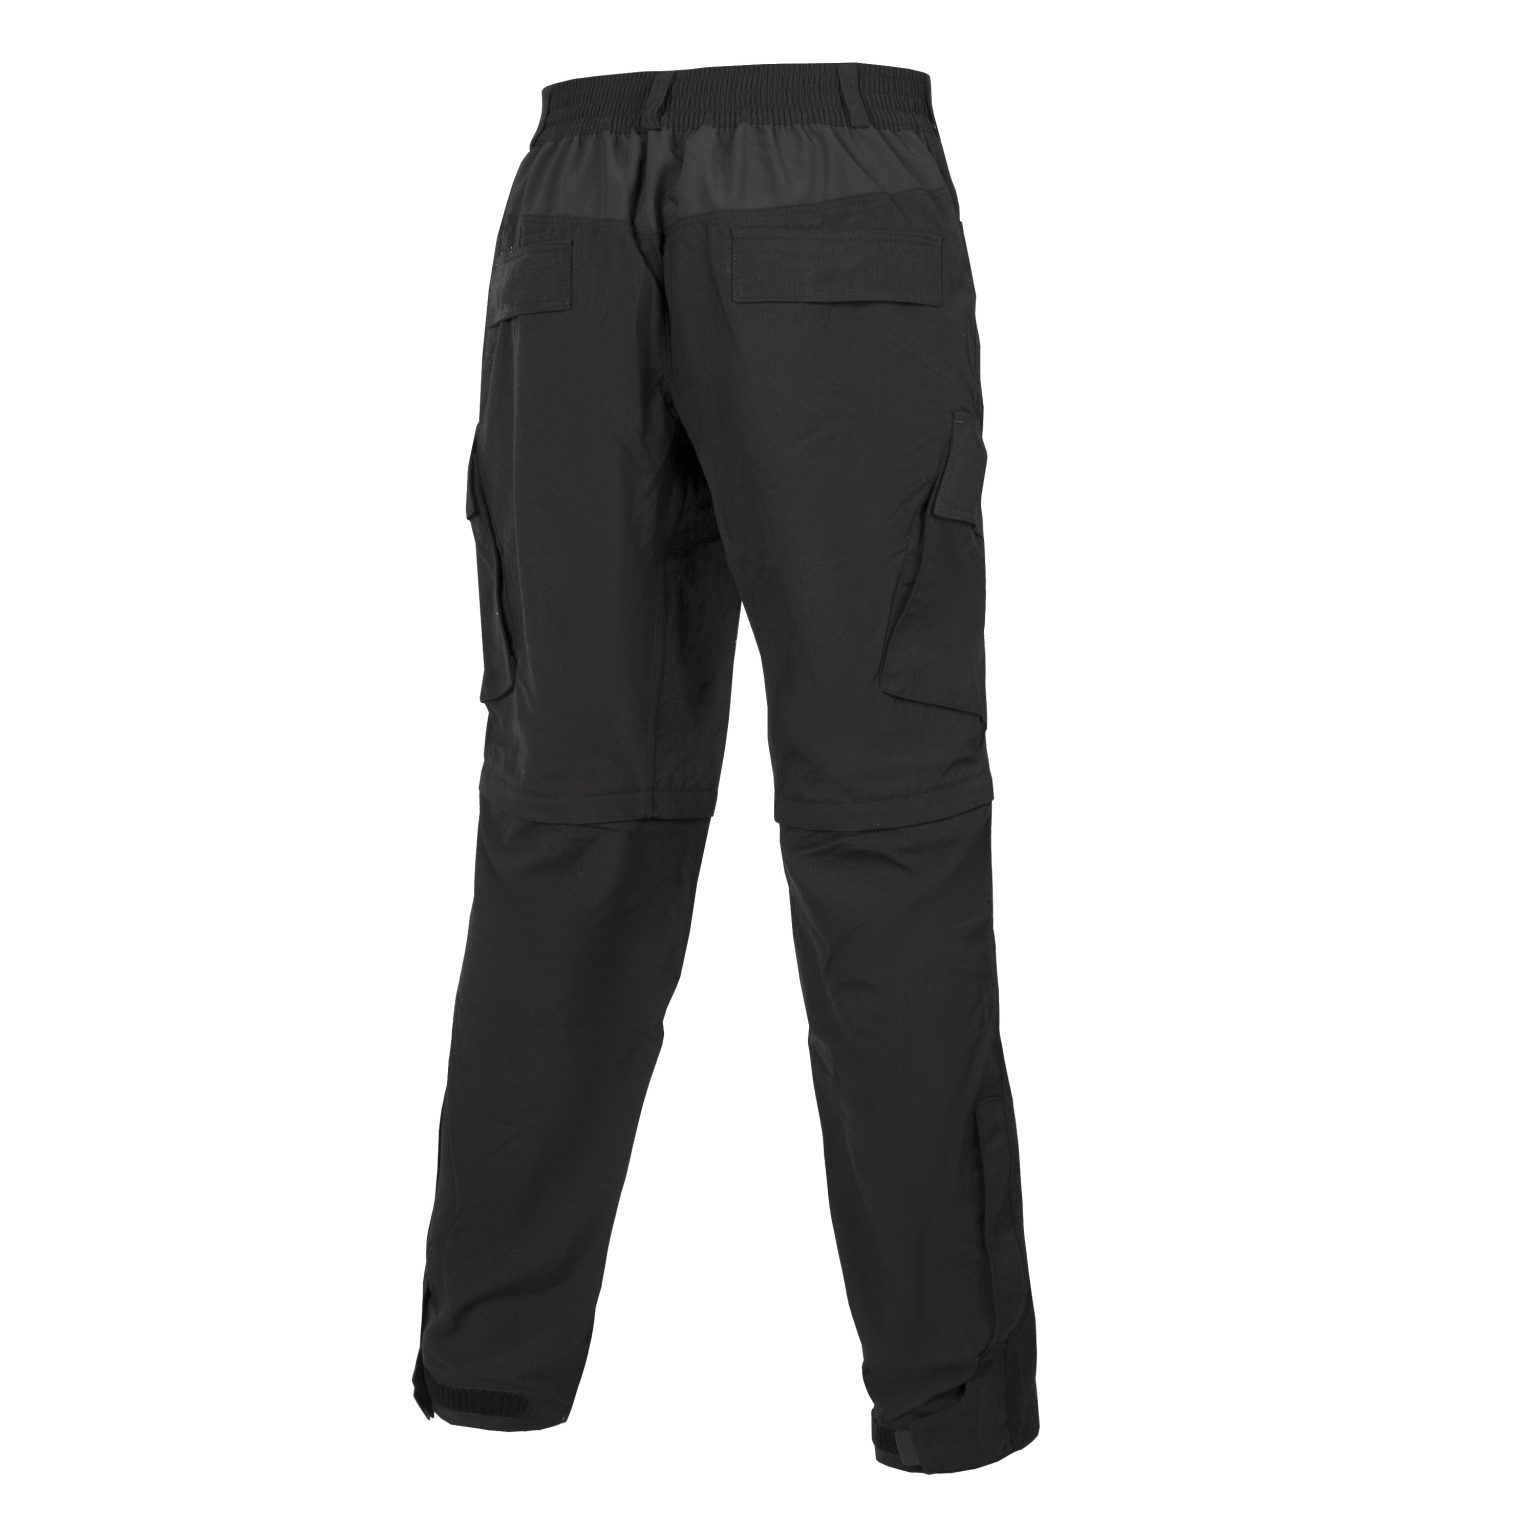 Police Uniform - Zip off trouser - Endura Uniforms